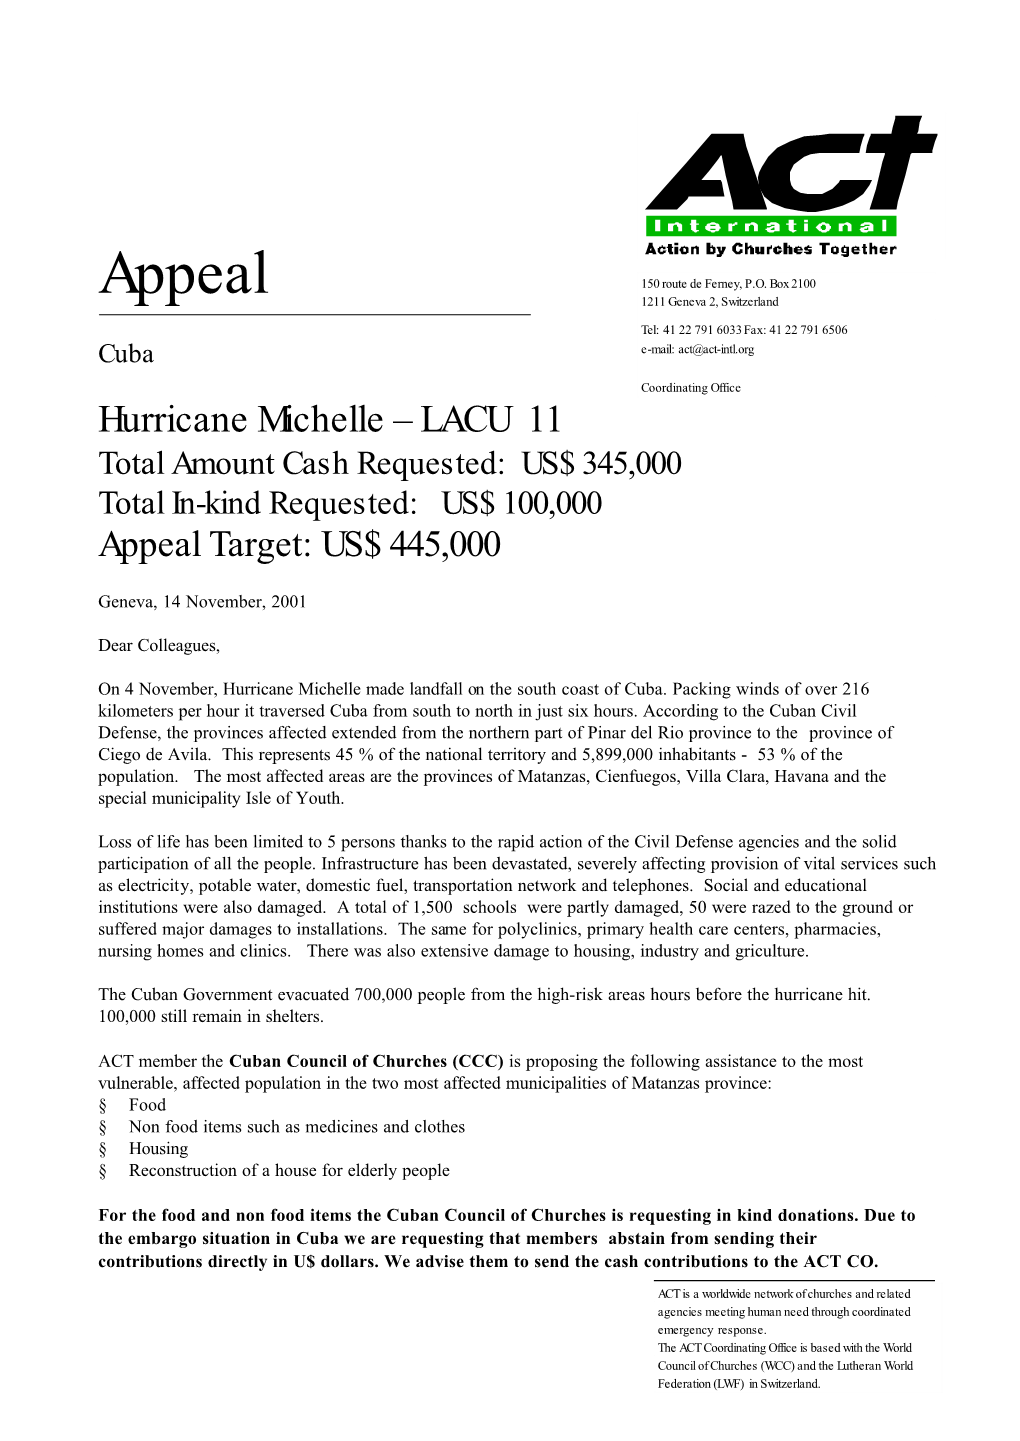 Appeal Cuba Hurricane Michelle